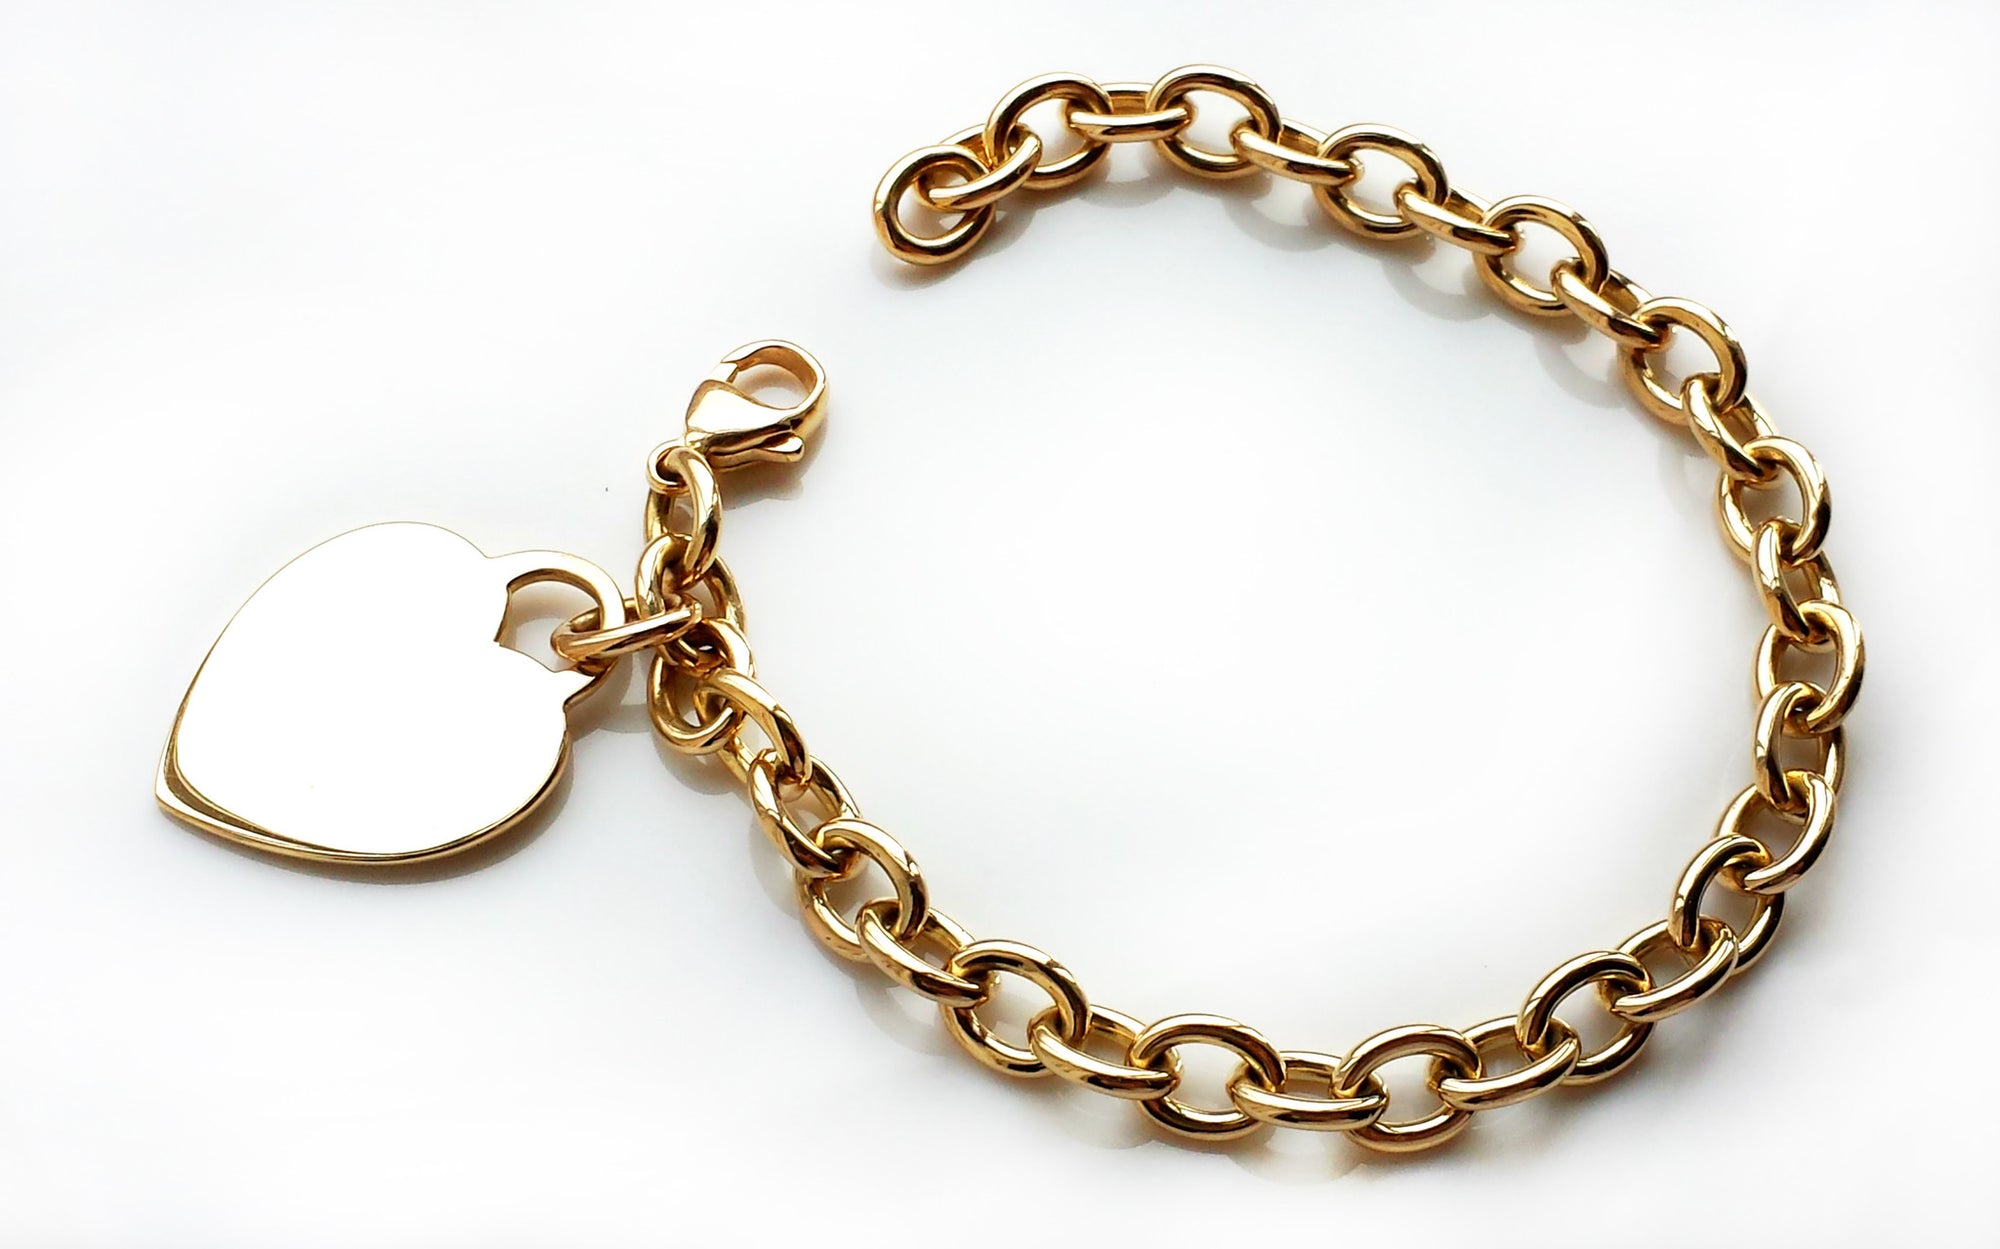 Tiffany & Co. 18k Gold Heart Tag Charm Bracelet, 7½ inches